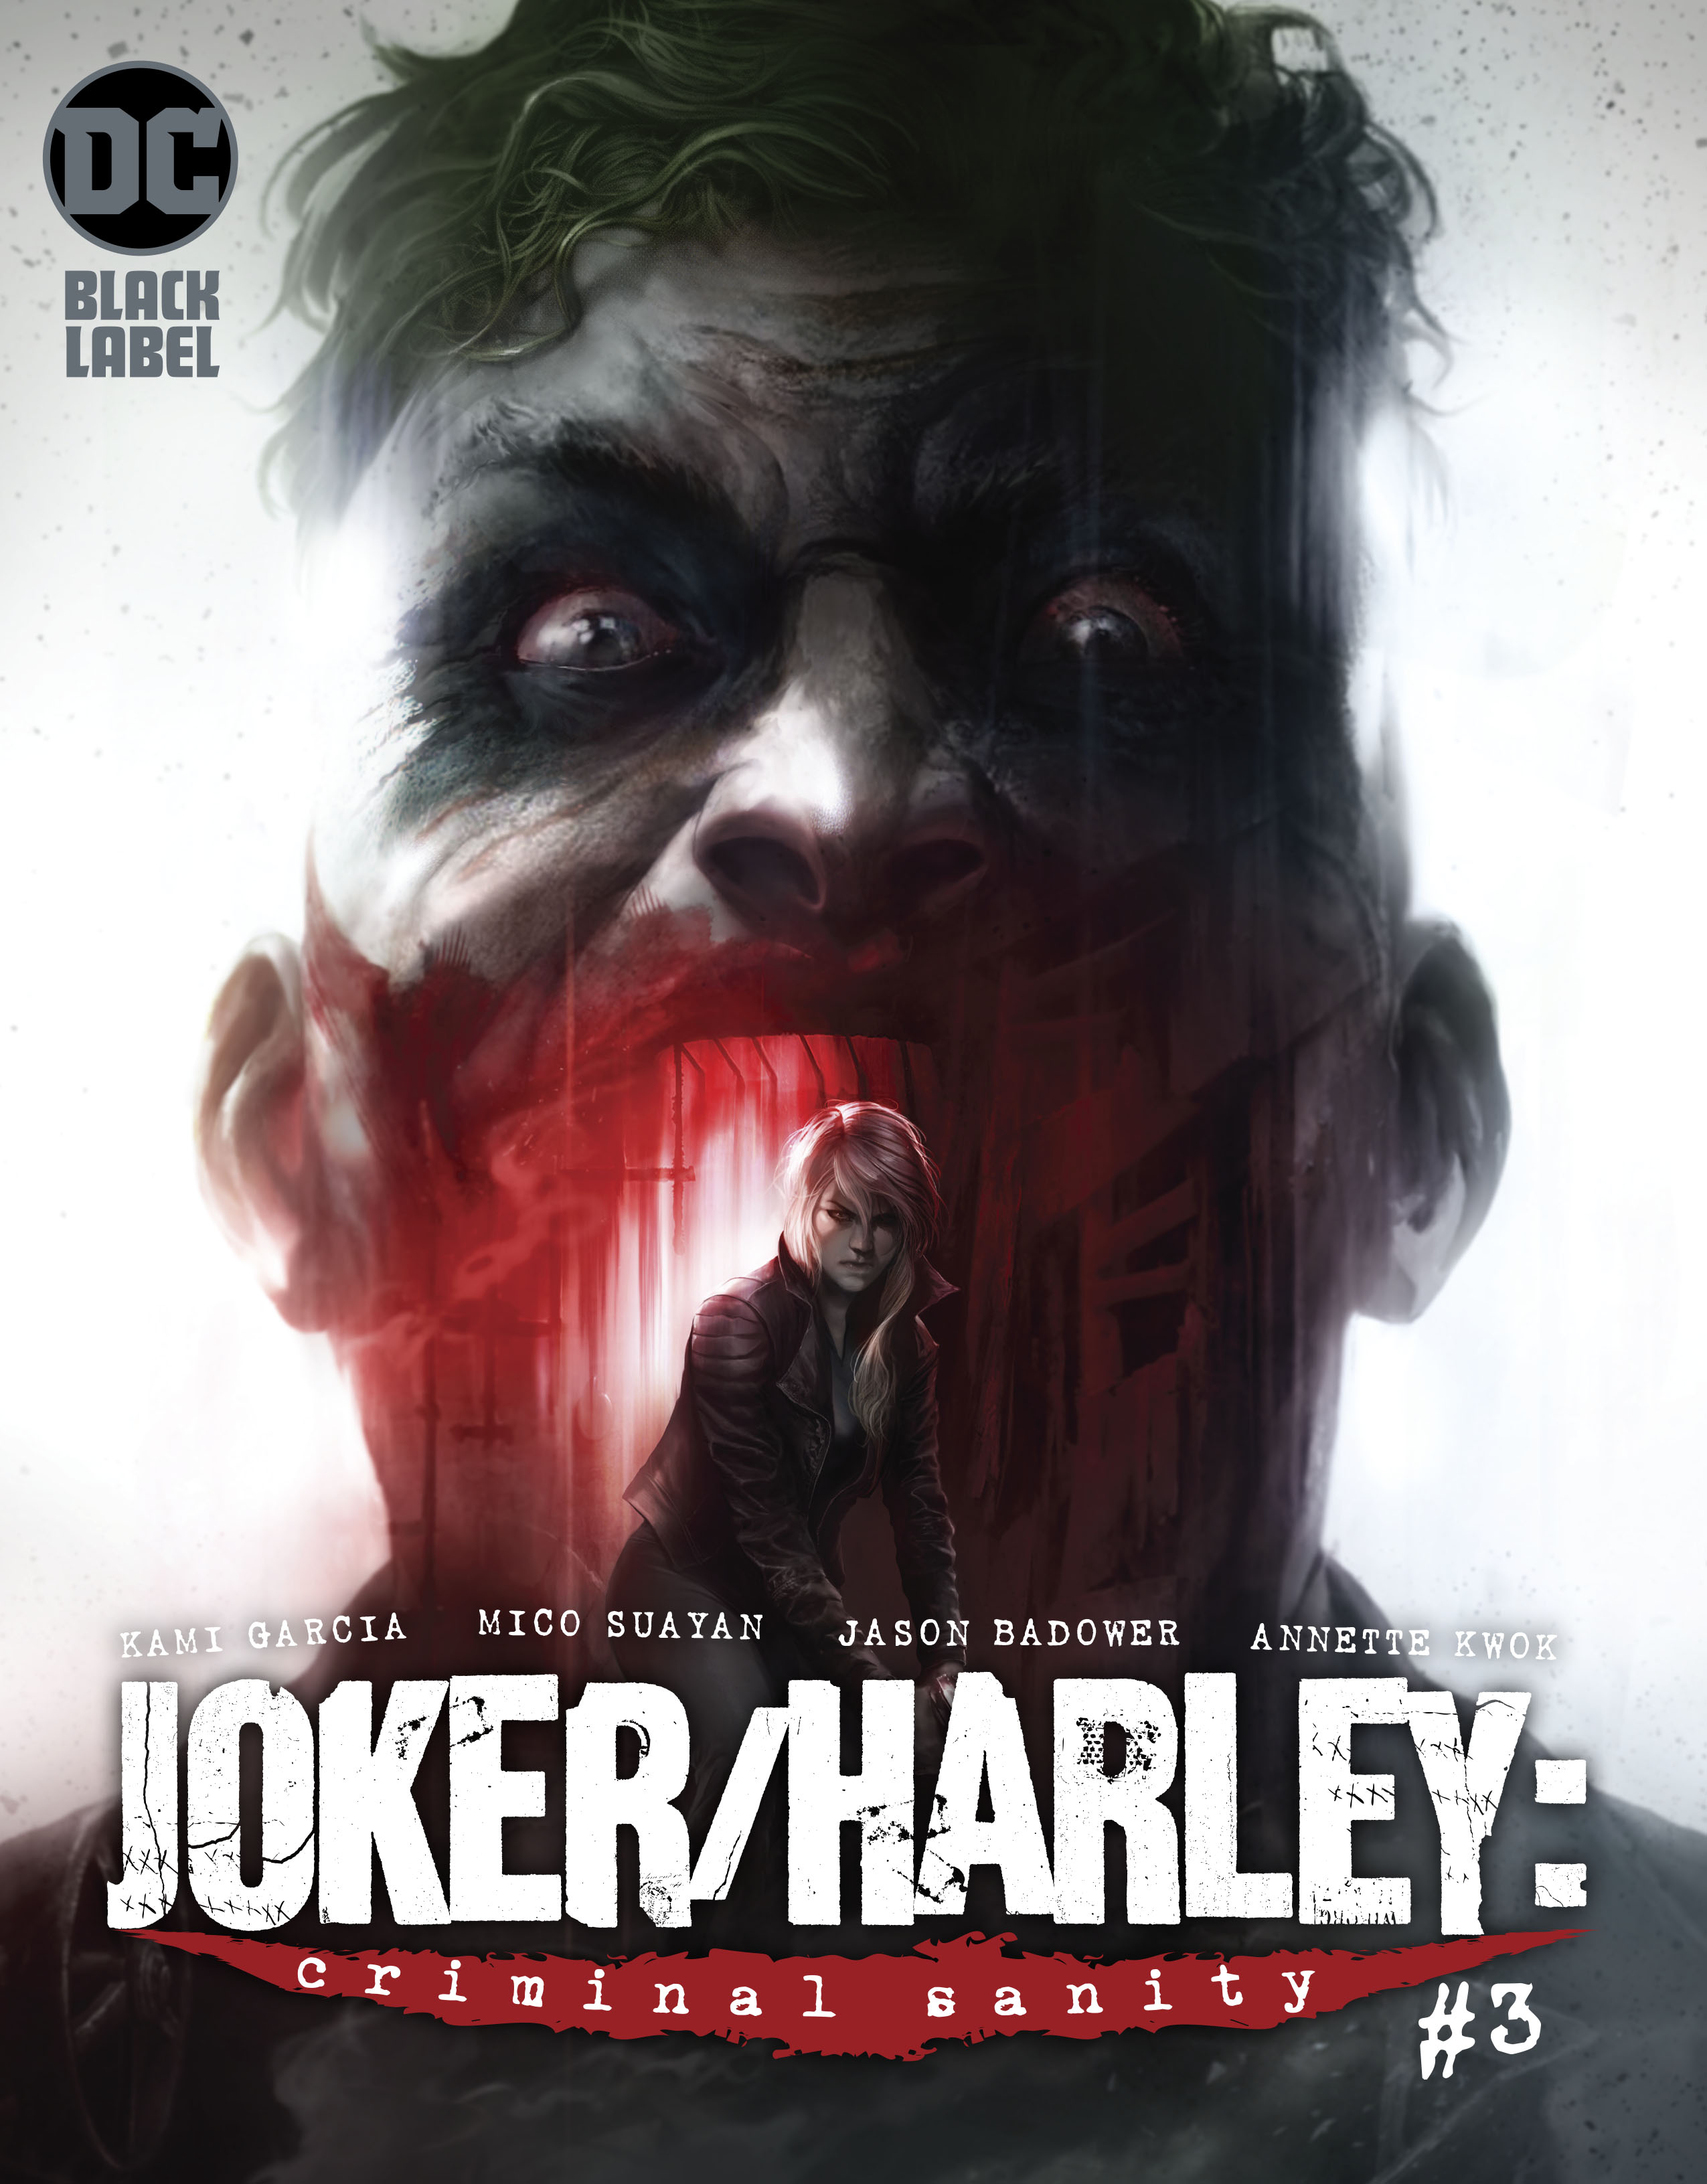 Joker Harley Criminal Sanity #3 (Mature) (Of 9)